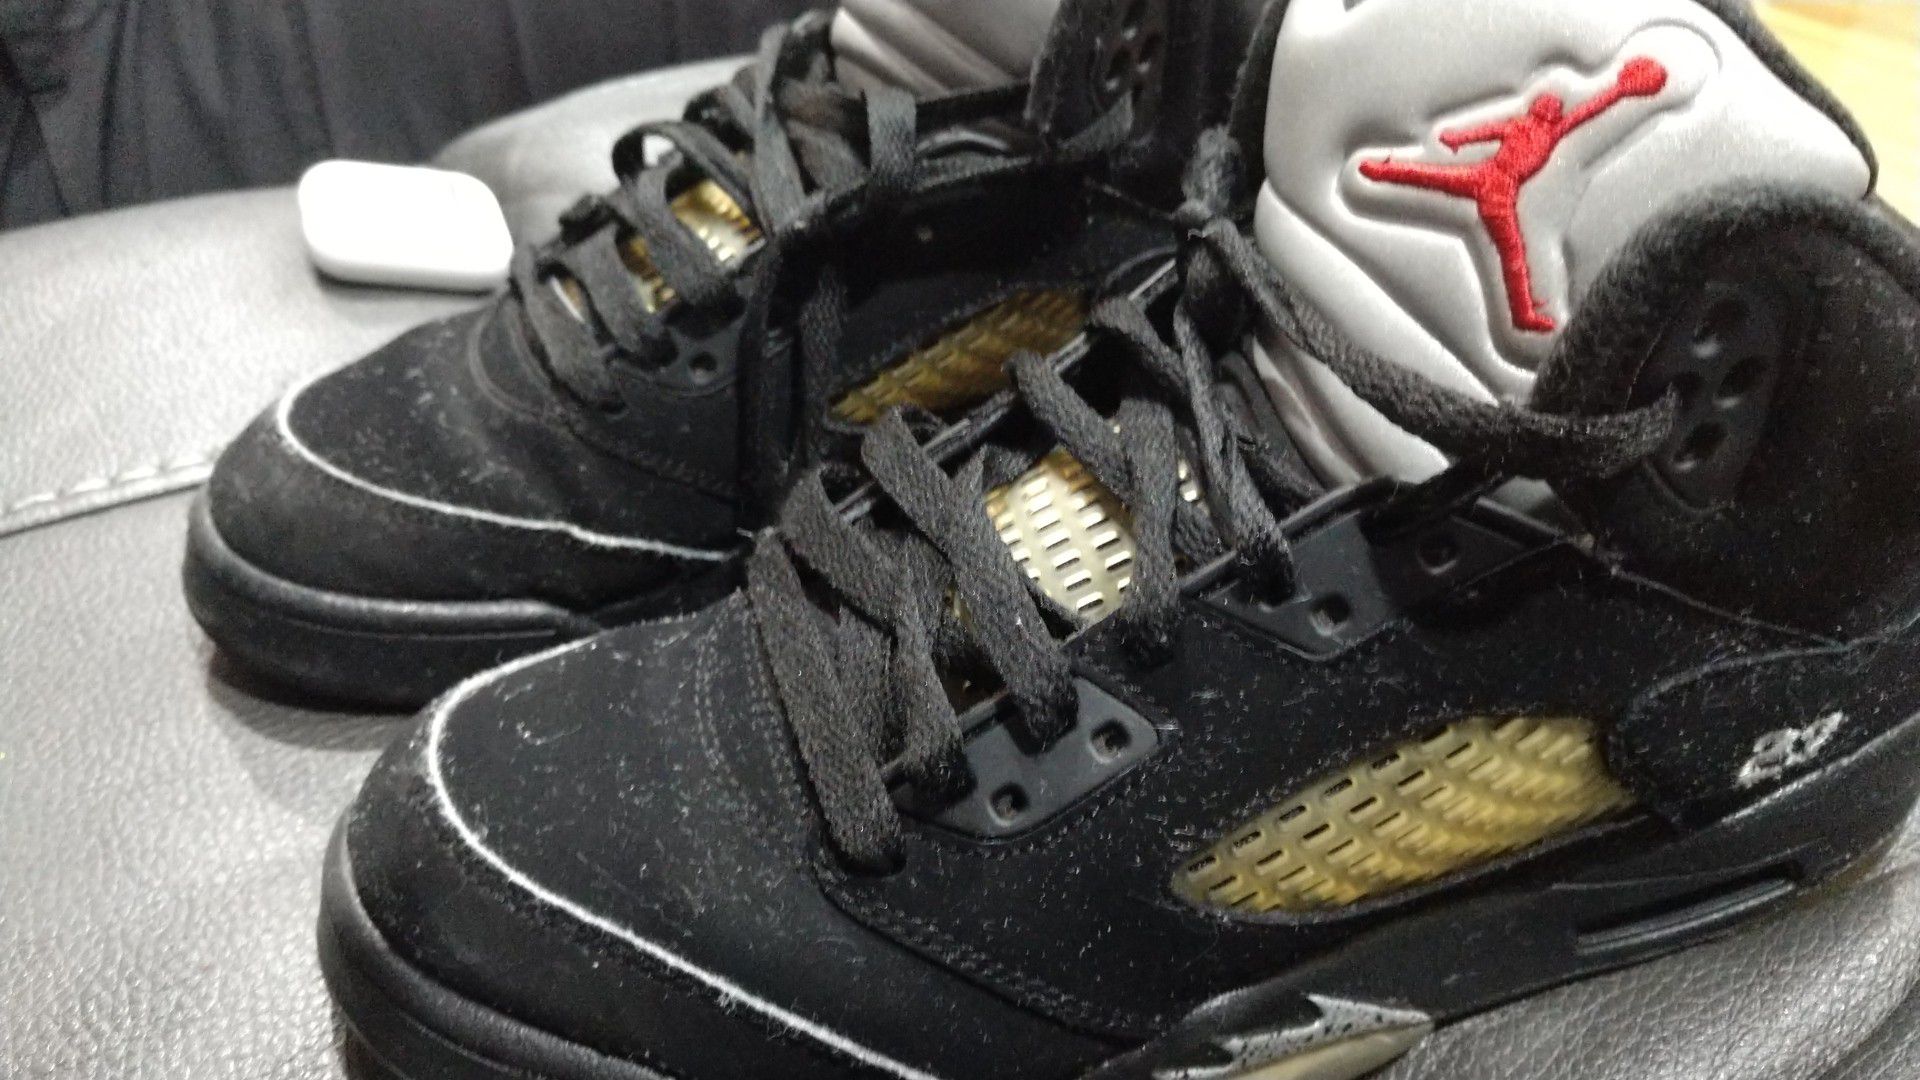 Nike air Jordan 5 size 6.5 great condition